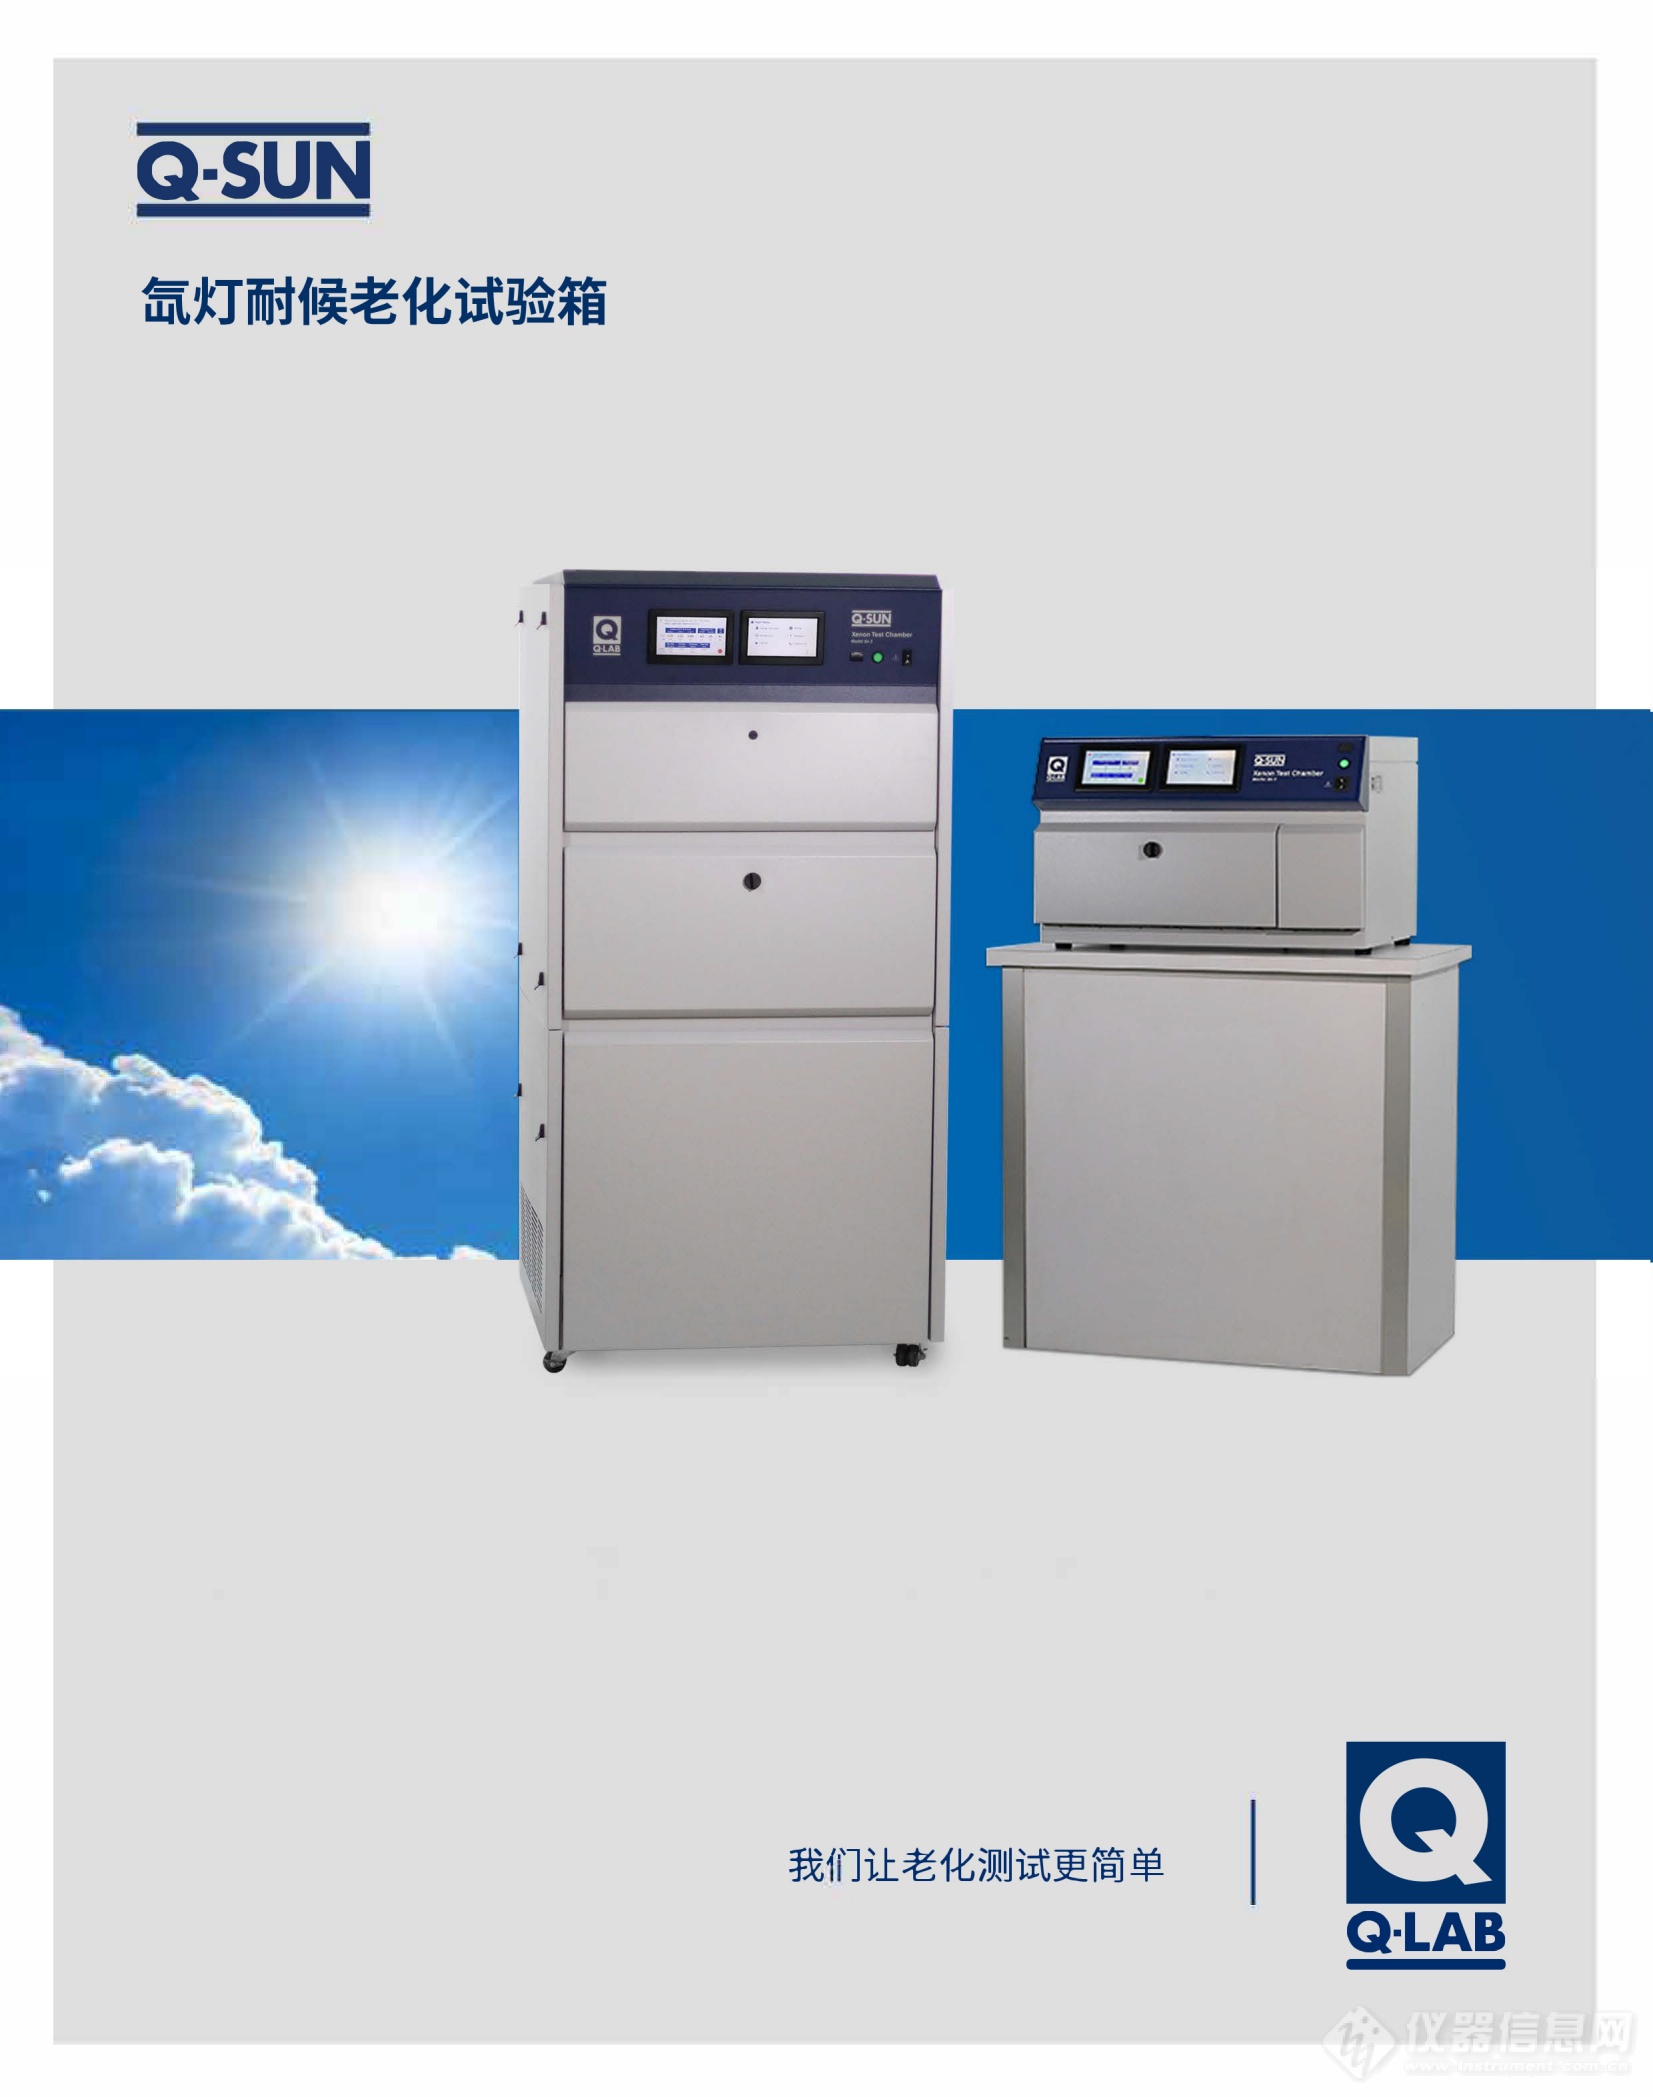 Q-SUN Xe-1&3氙灯耐候老化试验箱_00.png